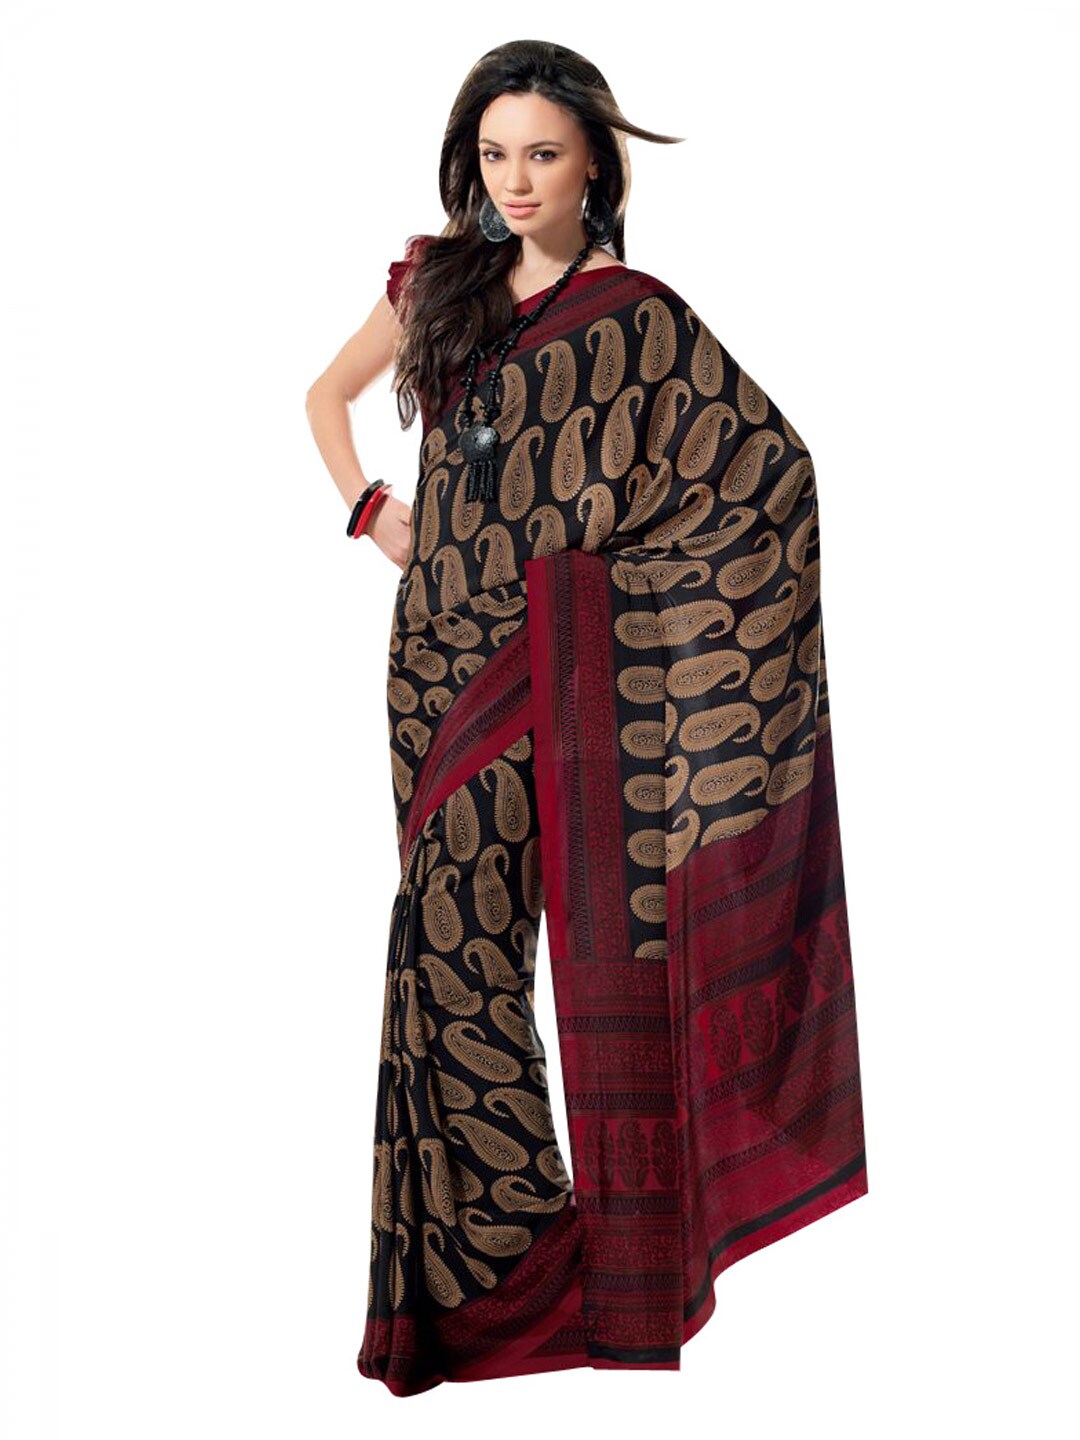 Prafful Black & Beige Crepe Sari